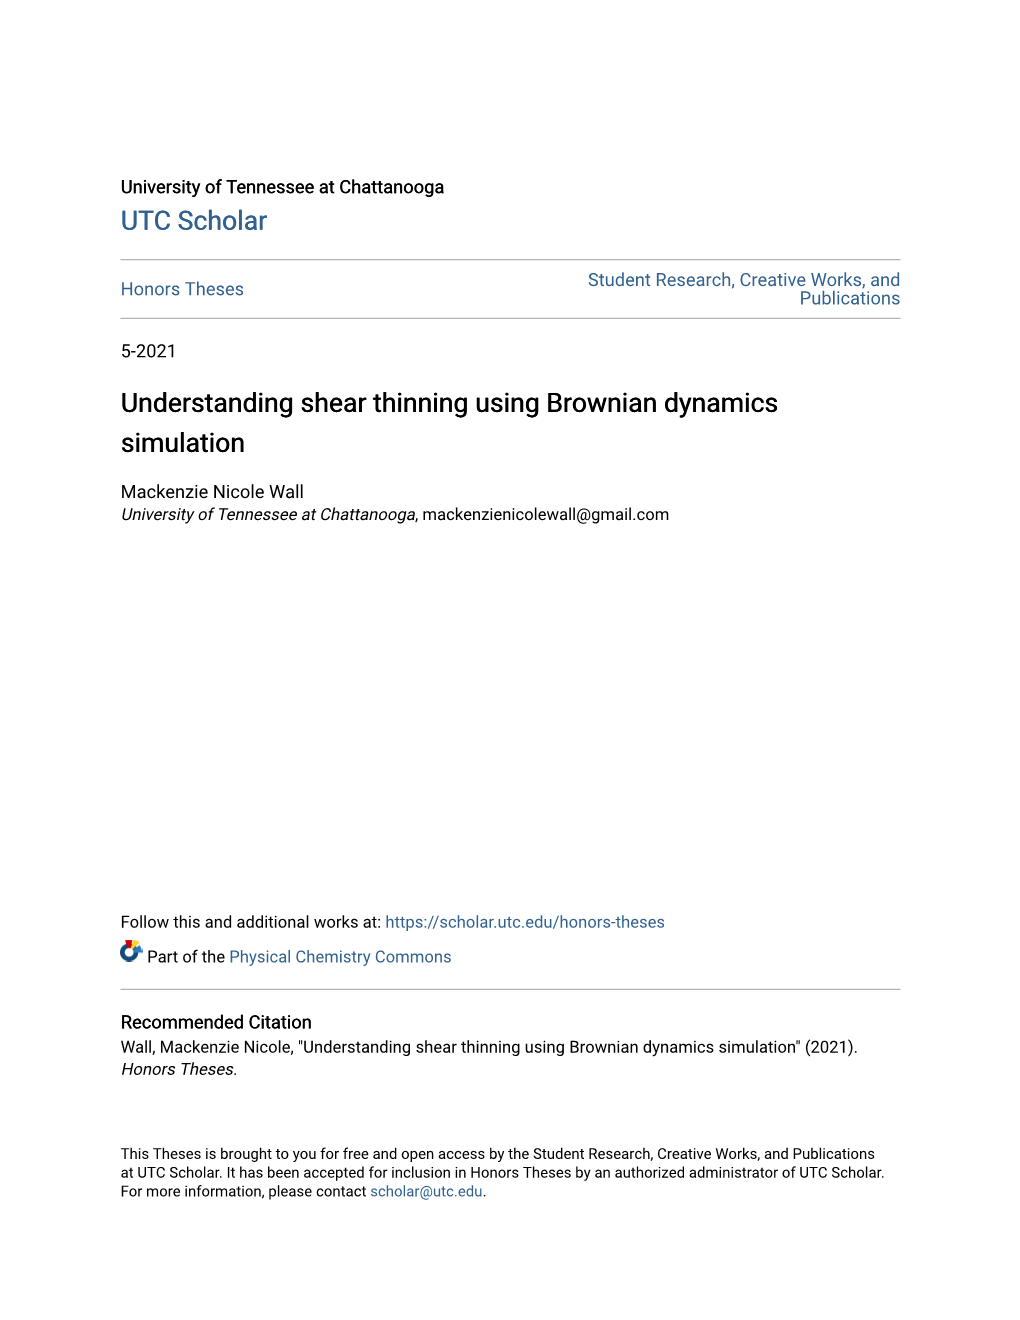 Understanding Shear Thinning Using Brownian Dynamics Simulation